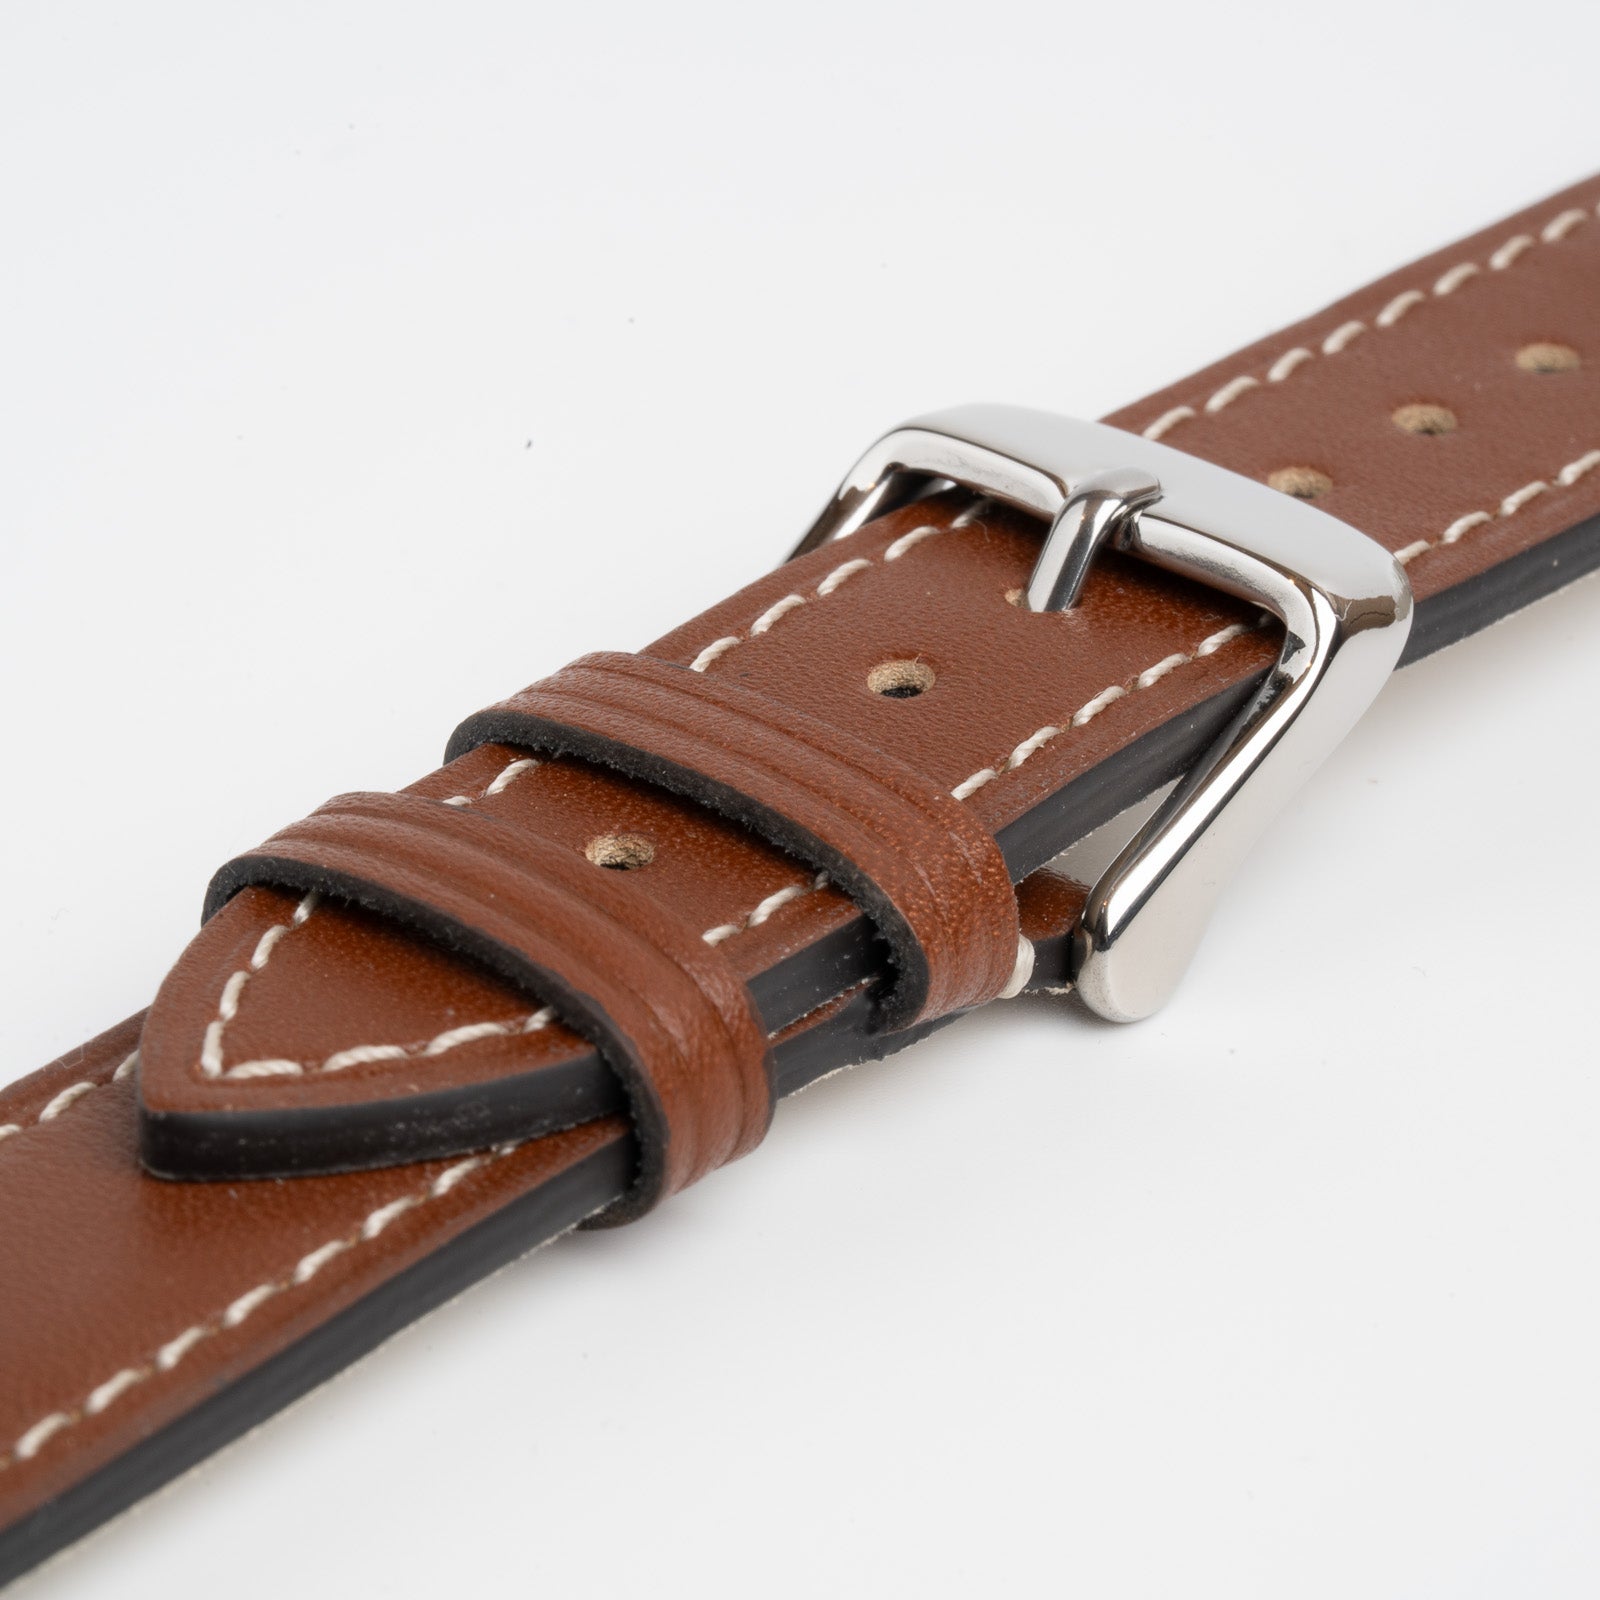 Handmade Contrast Brown Watch Strap